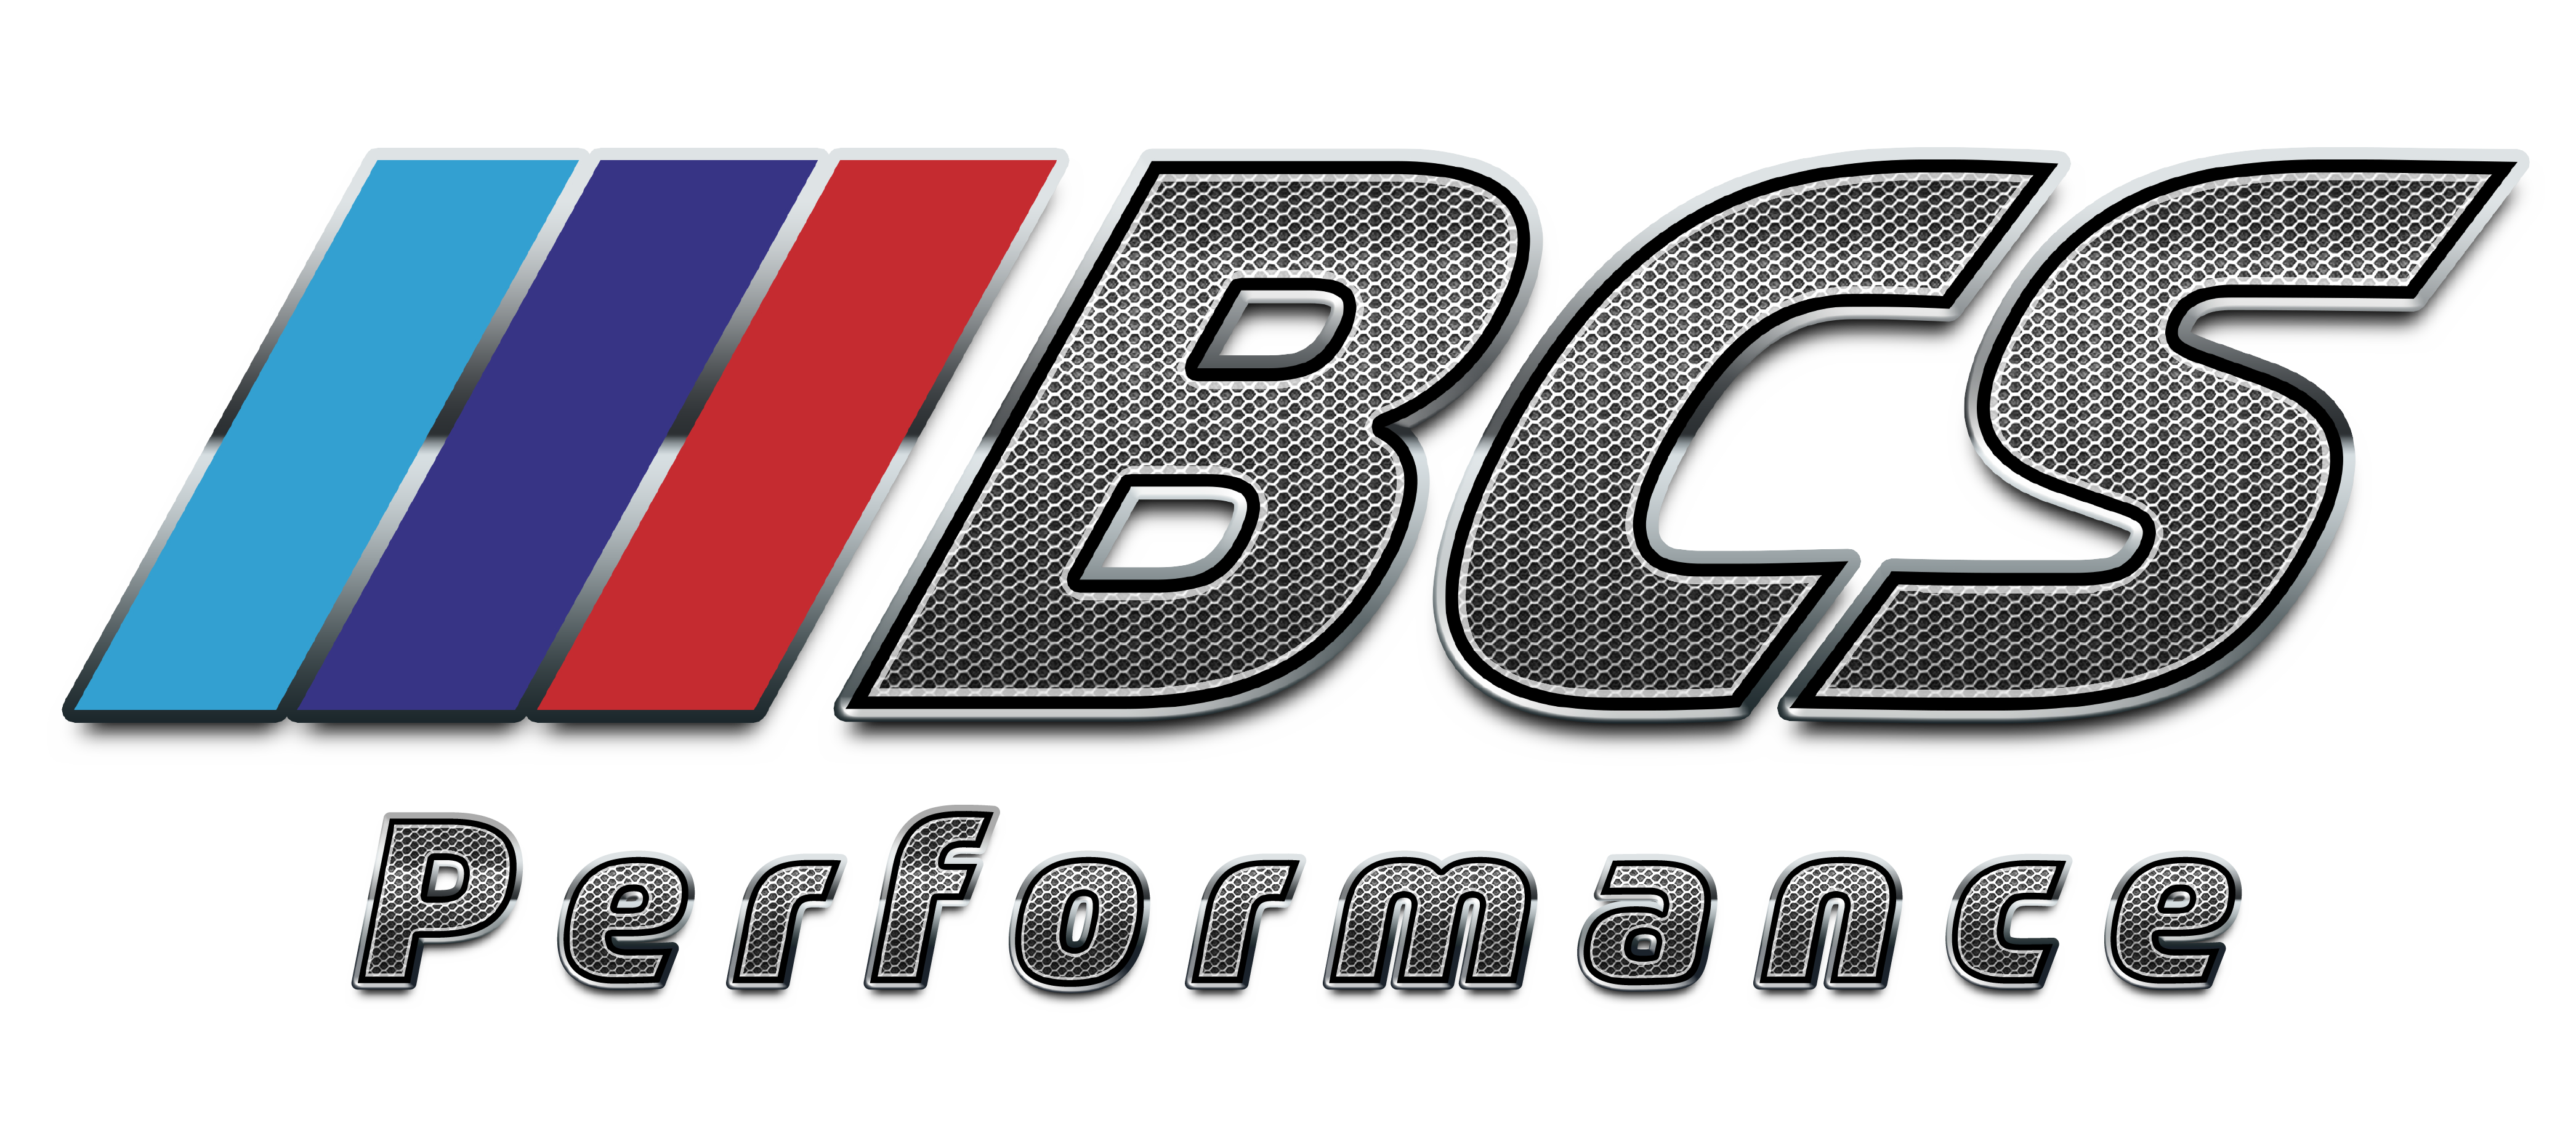 bcs-performance-logo-vectorial-01